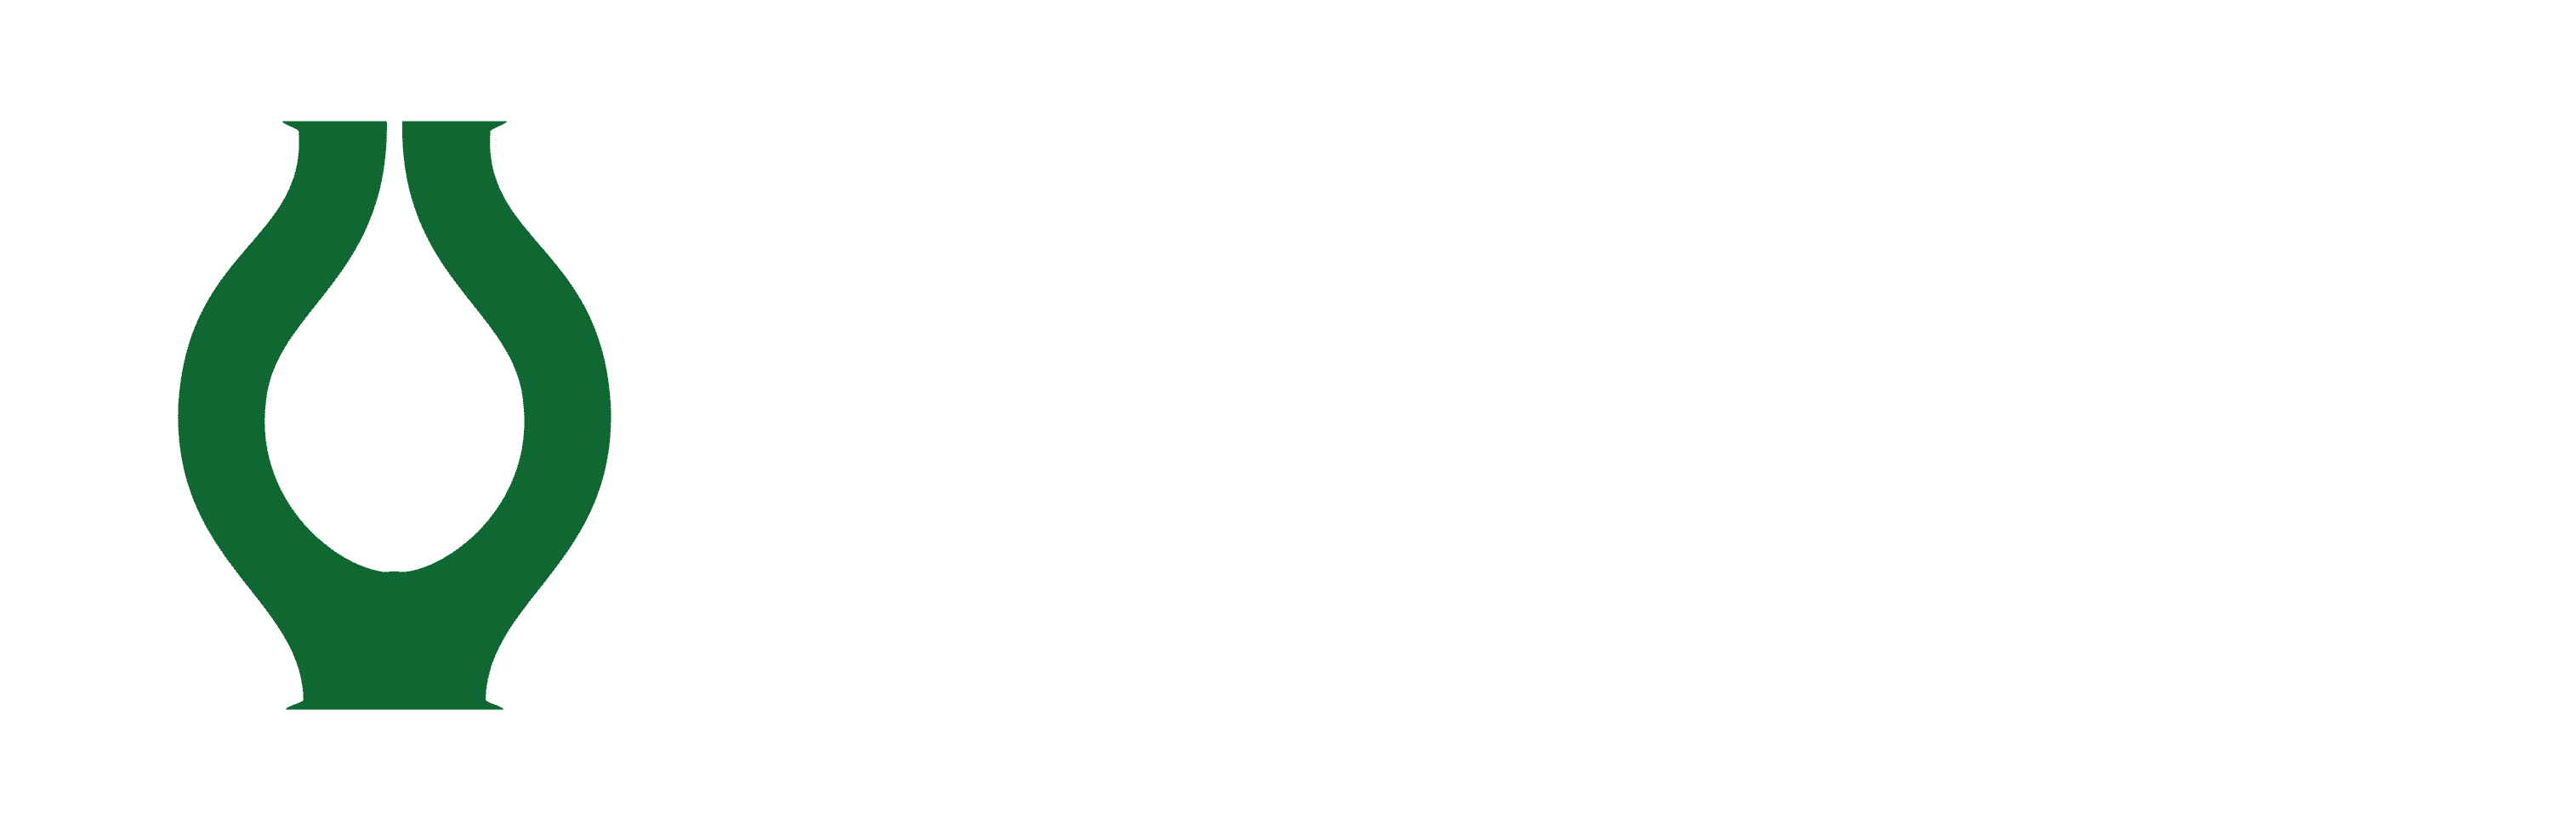 Oleificio Mediterraneo